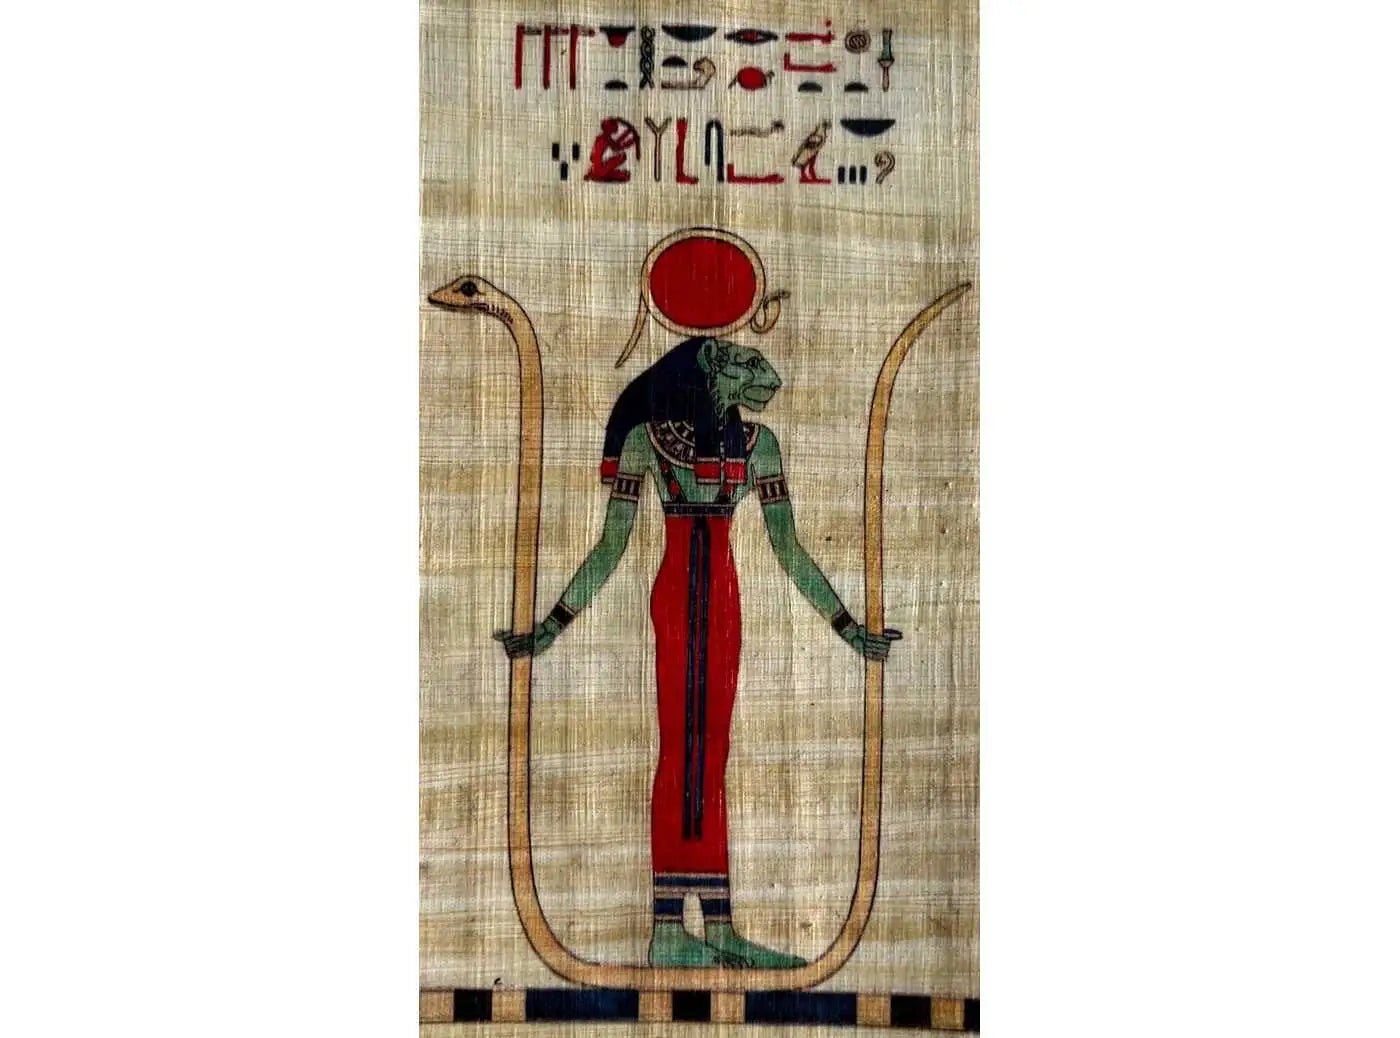 Sakhmet Illustration from Pantheon Egyptien Printing on Papyrus - Hieroglyphs Symbols - Sekhmet, Sekmet, Lioness